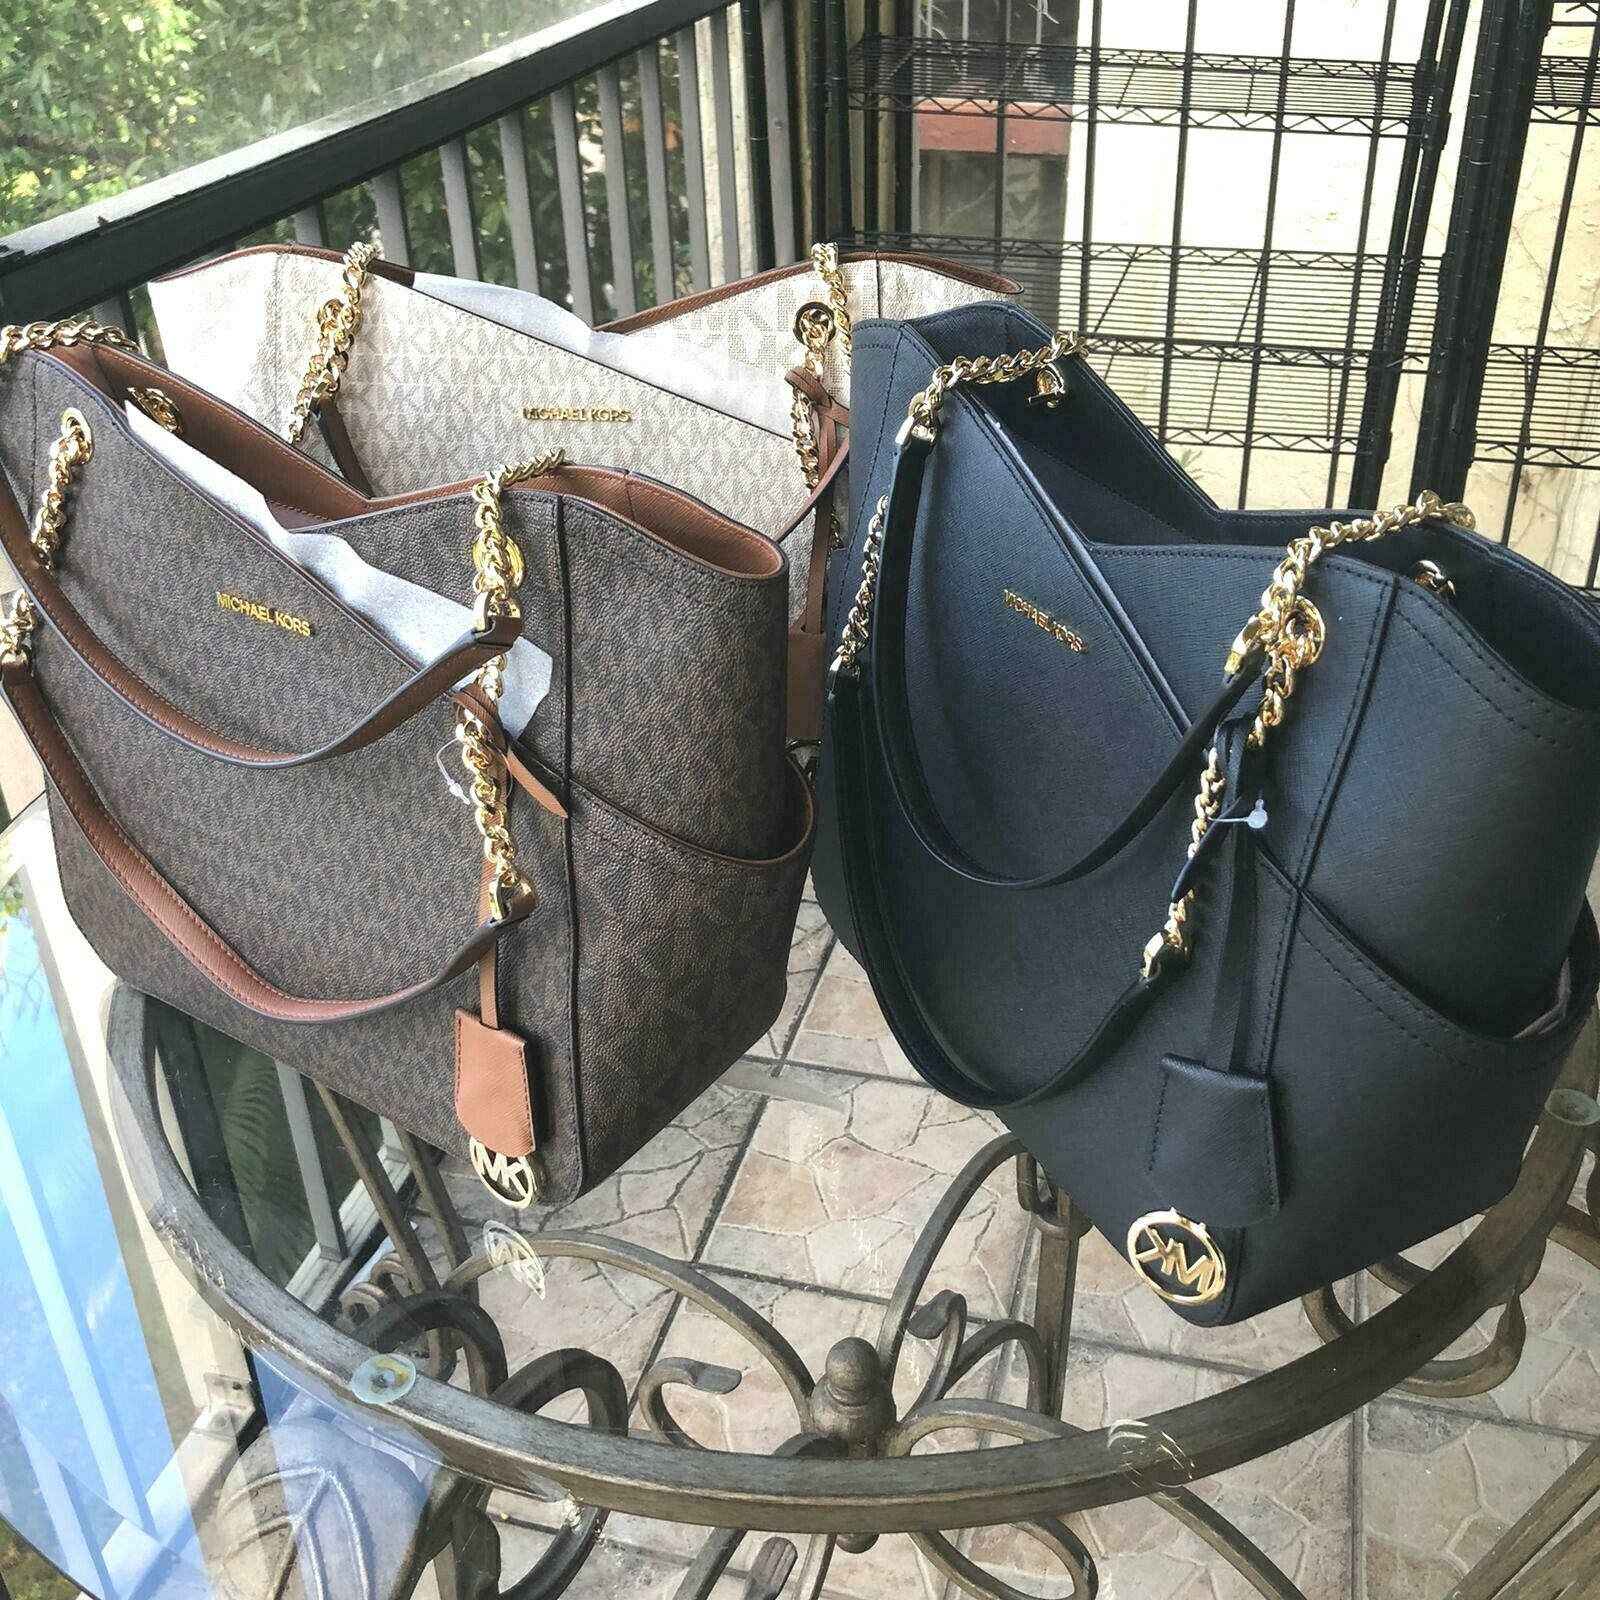 Designer Handbags For sale, Ladies Handbags For sale